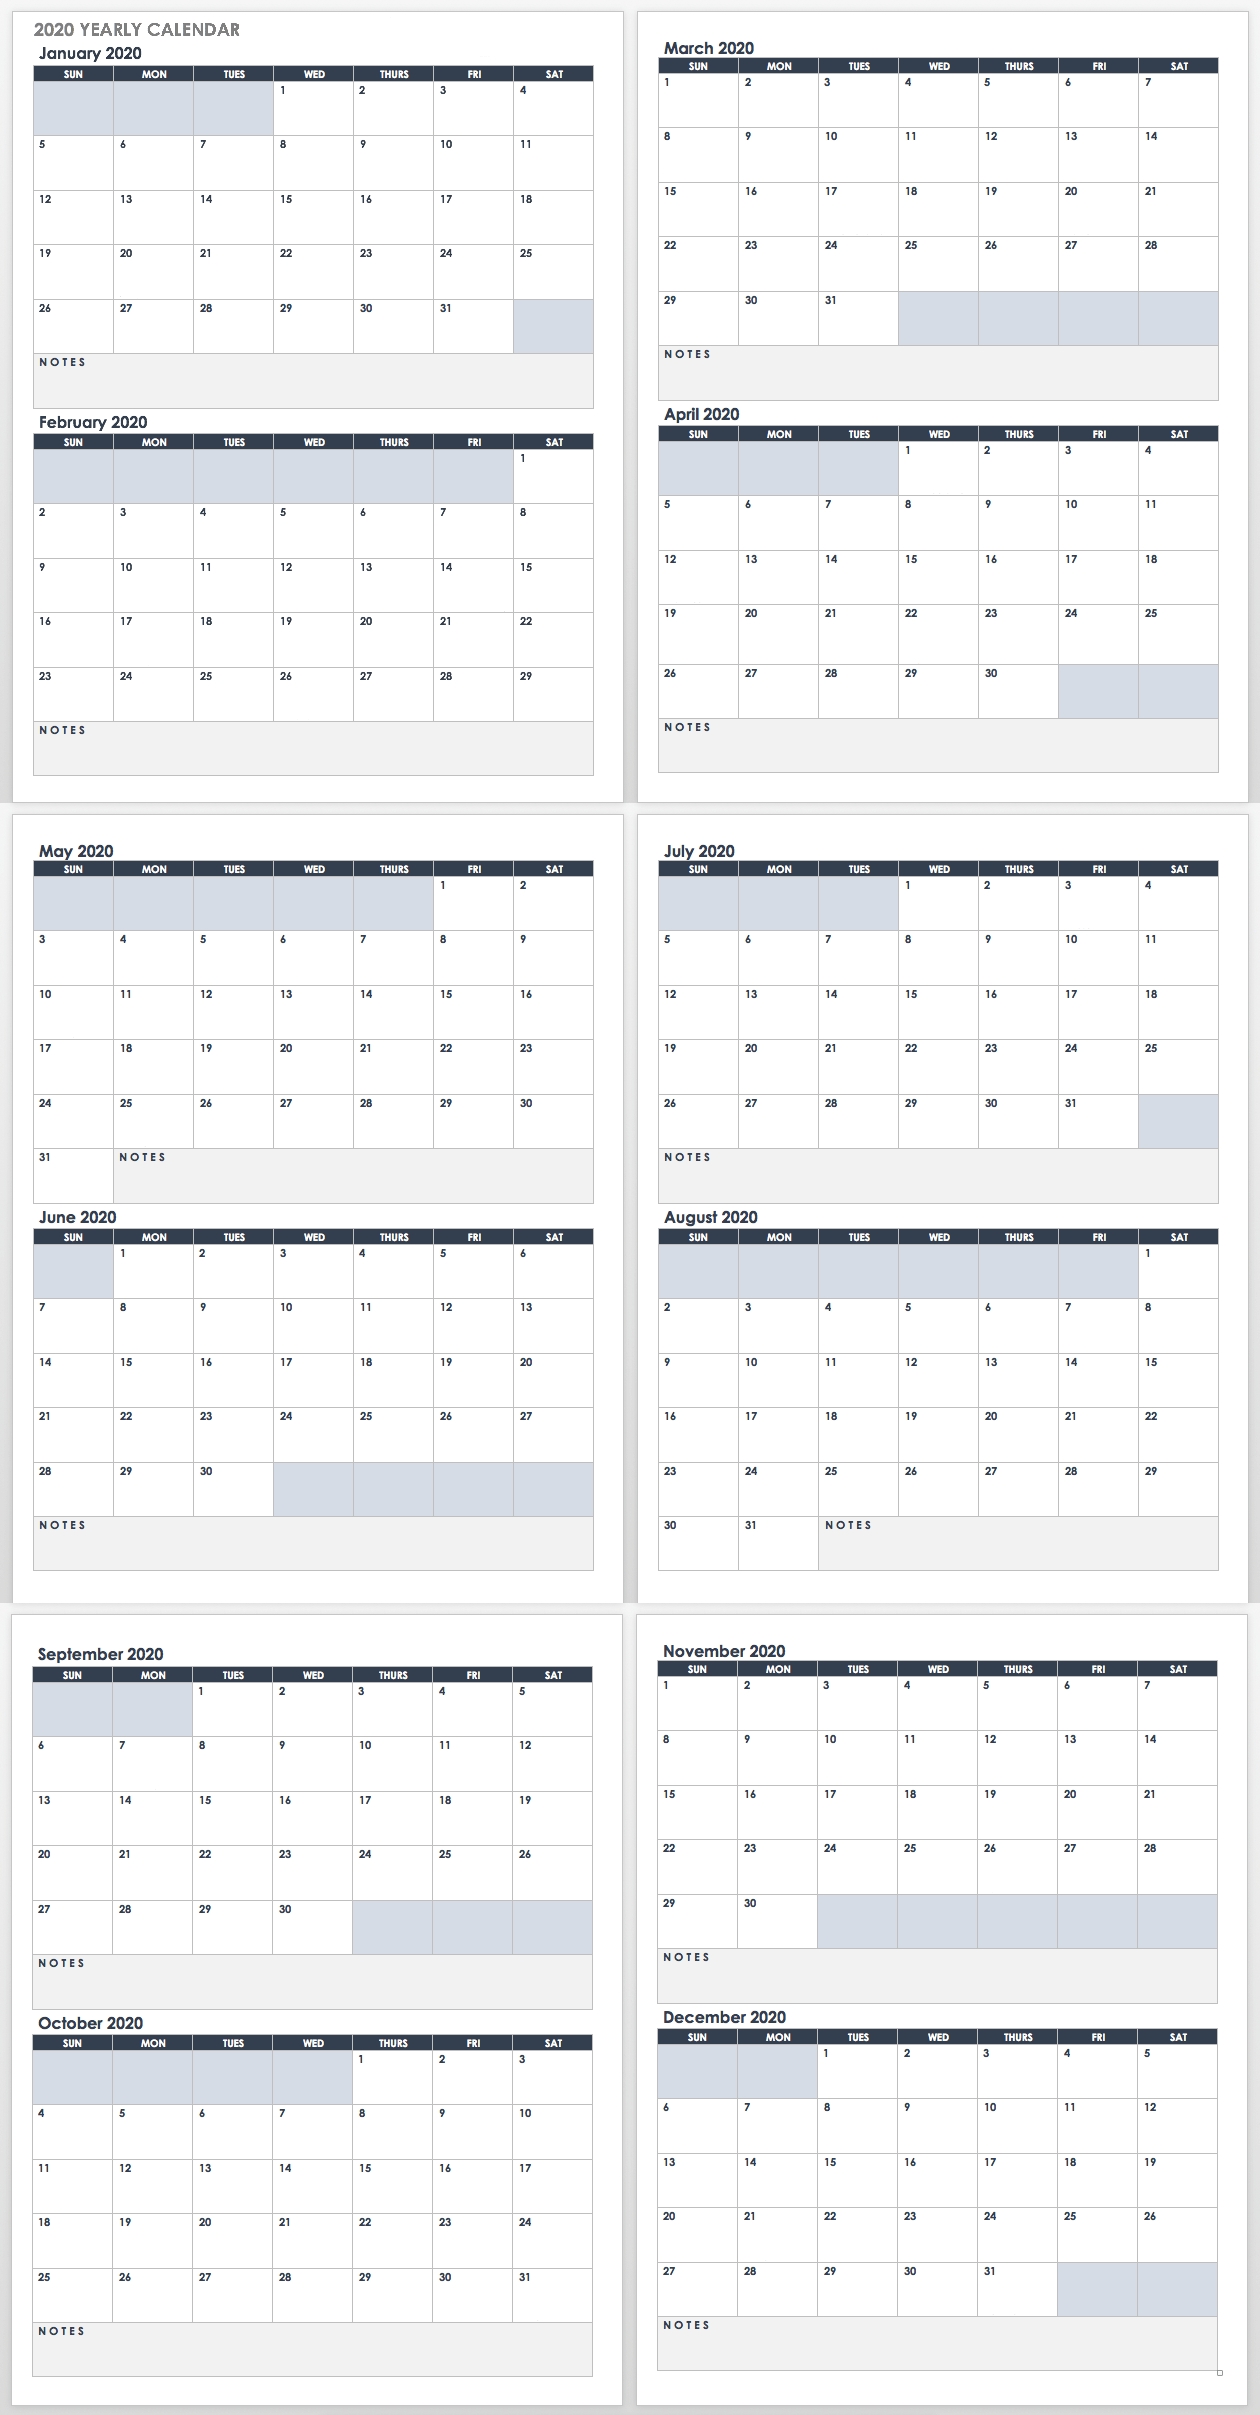 Free Google Calendar Templates | Smartsheet-2020 Monthly Calendar Smartsheet